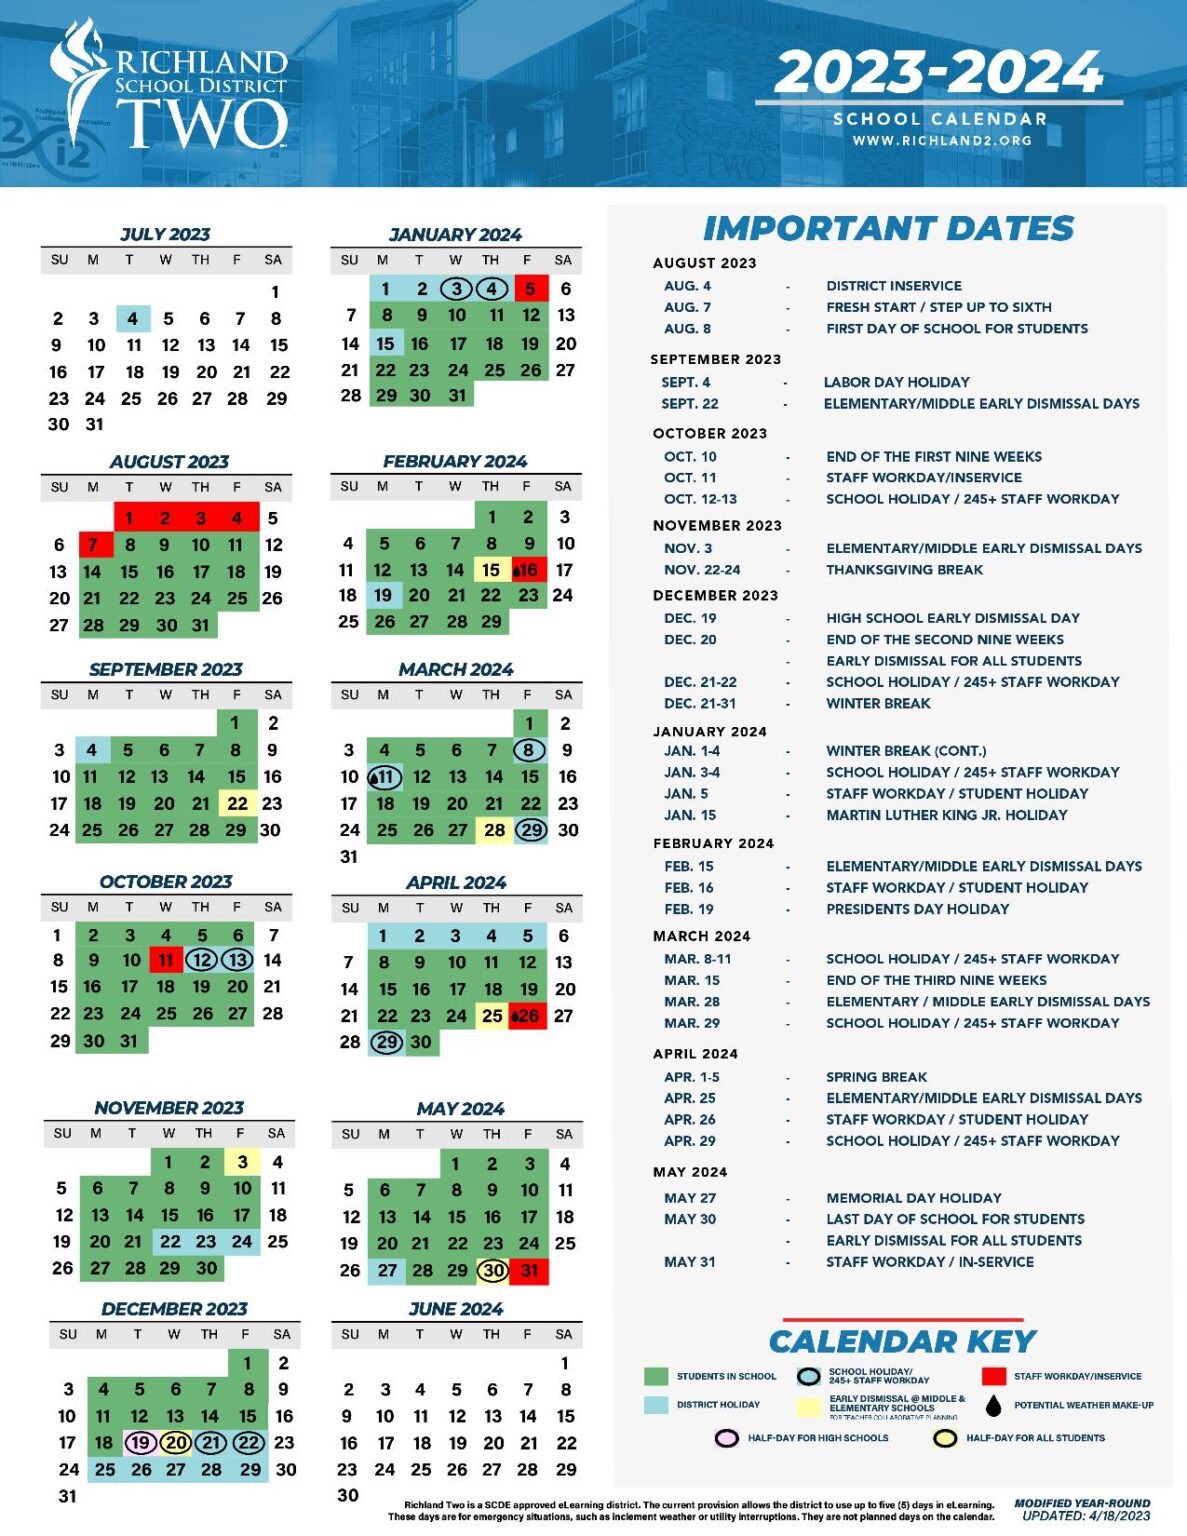 Richland School District 2 Calendar 2023 2024 in PDF